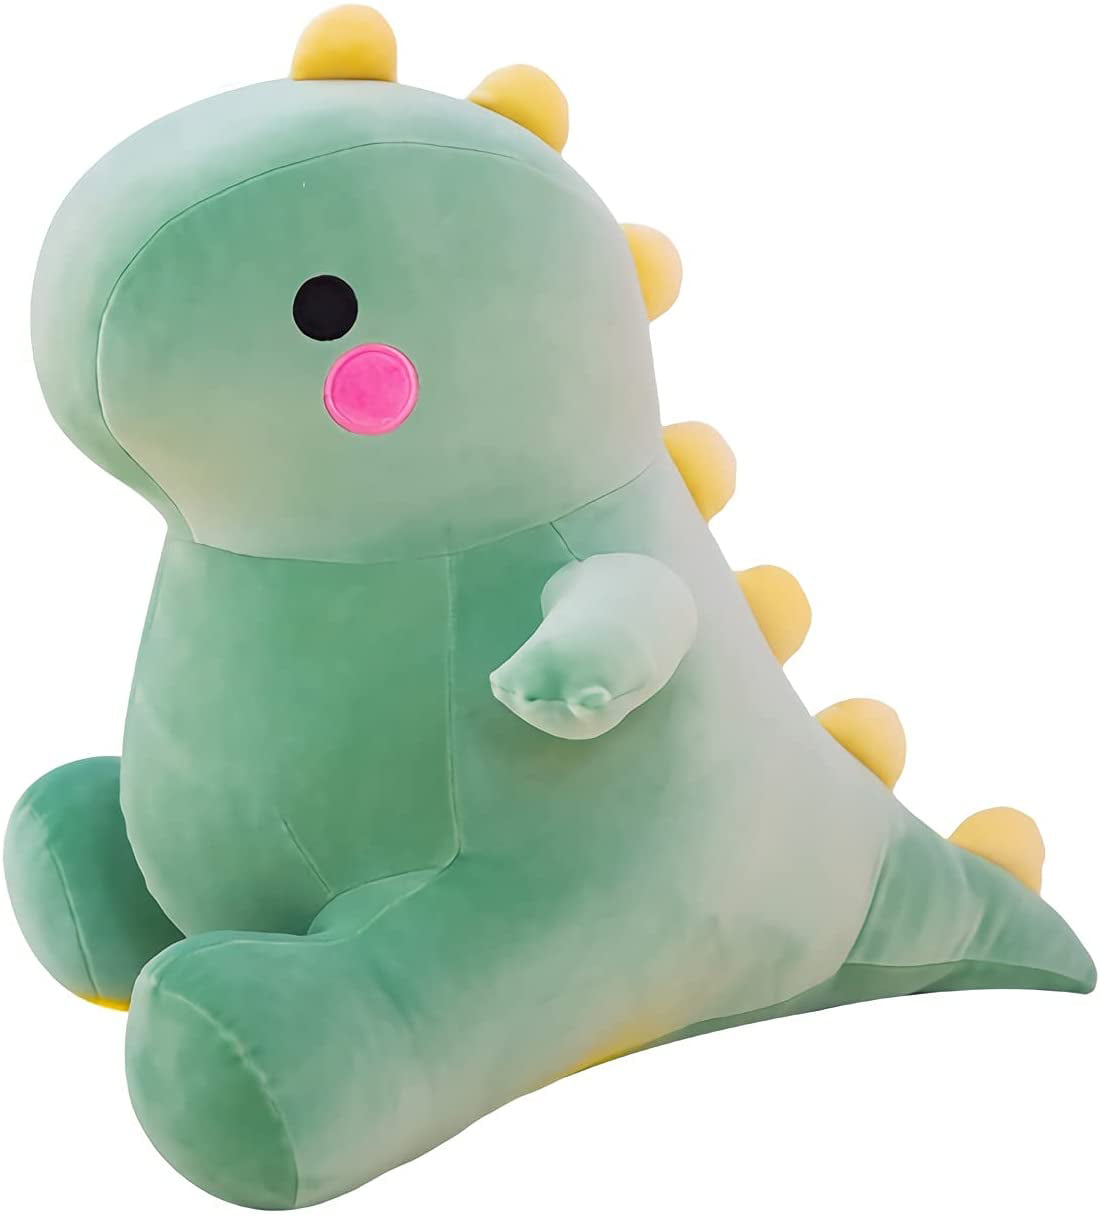 INT 30 Shiny Rαyquαzα Plush Toy,Soft Stuff Animal Collectible Birthday  Gift 